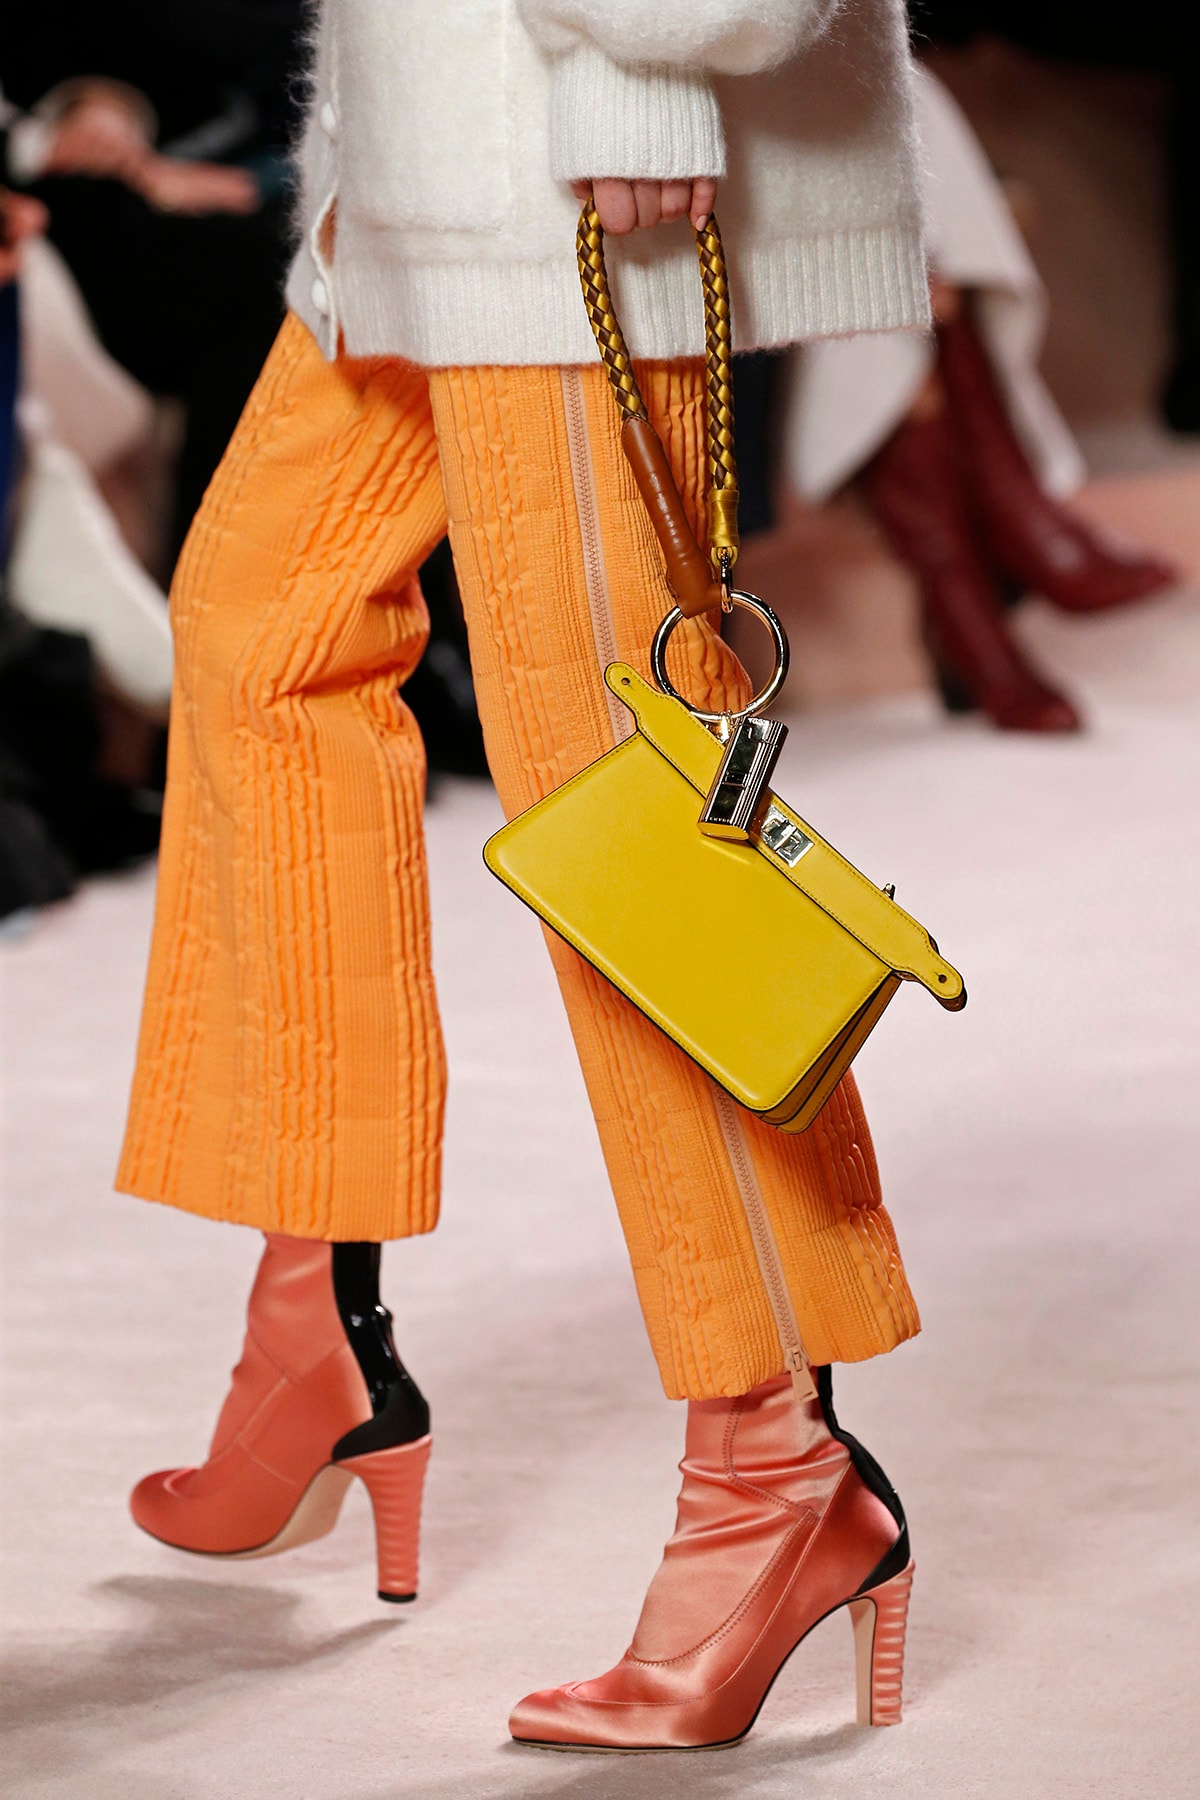 Fendi Fall/Winter 2020 Collection Bags Accessories Wristlet Clutch Orange